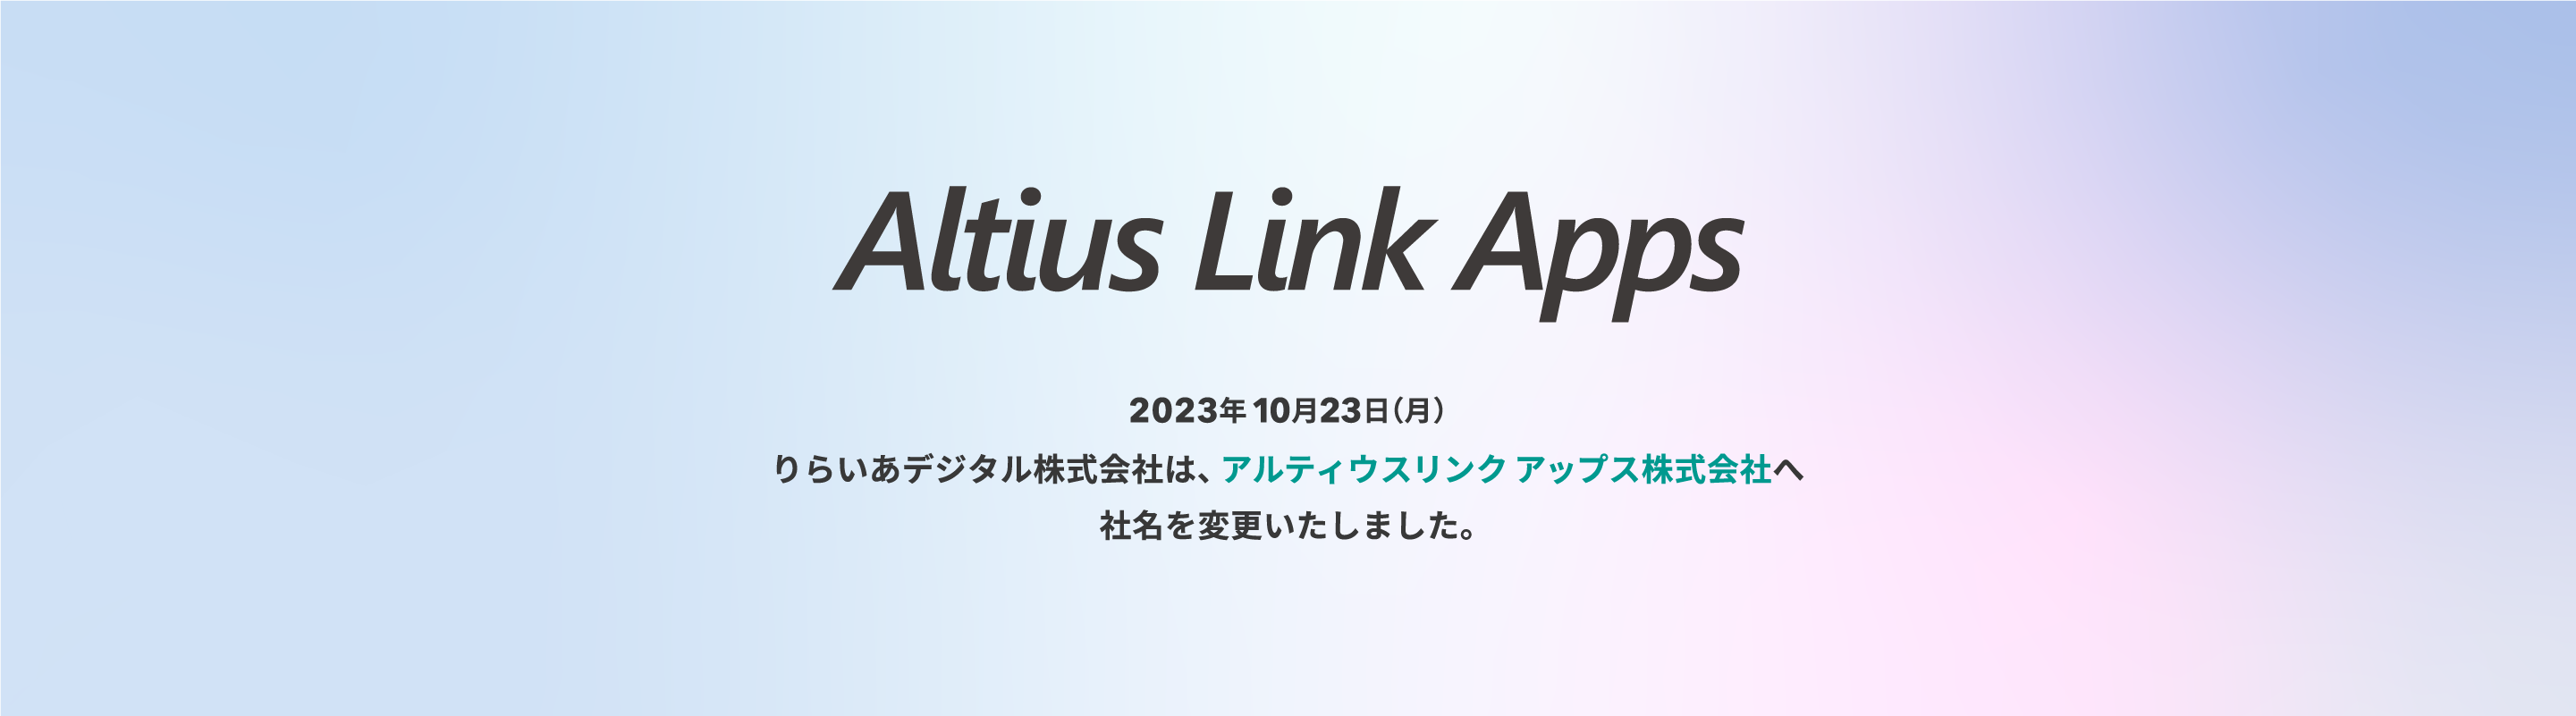 Altius Link Apps 2023年10月23日（月）りらいあデジタル株式会社は、アルティウスリンクアップス株式会社へ社名を変更いたしました。